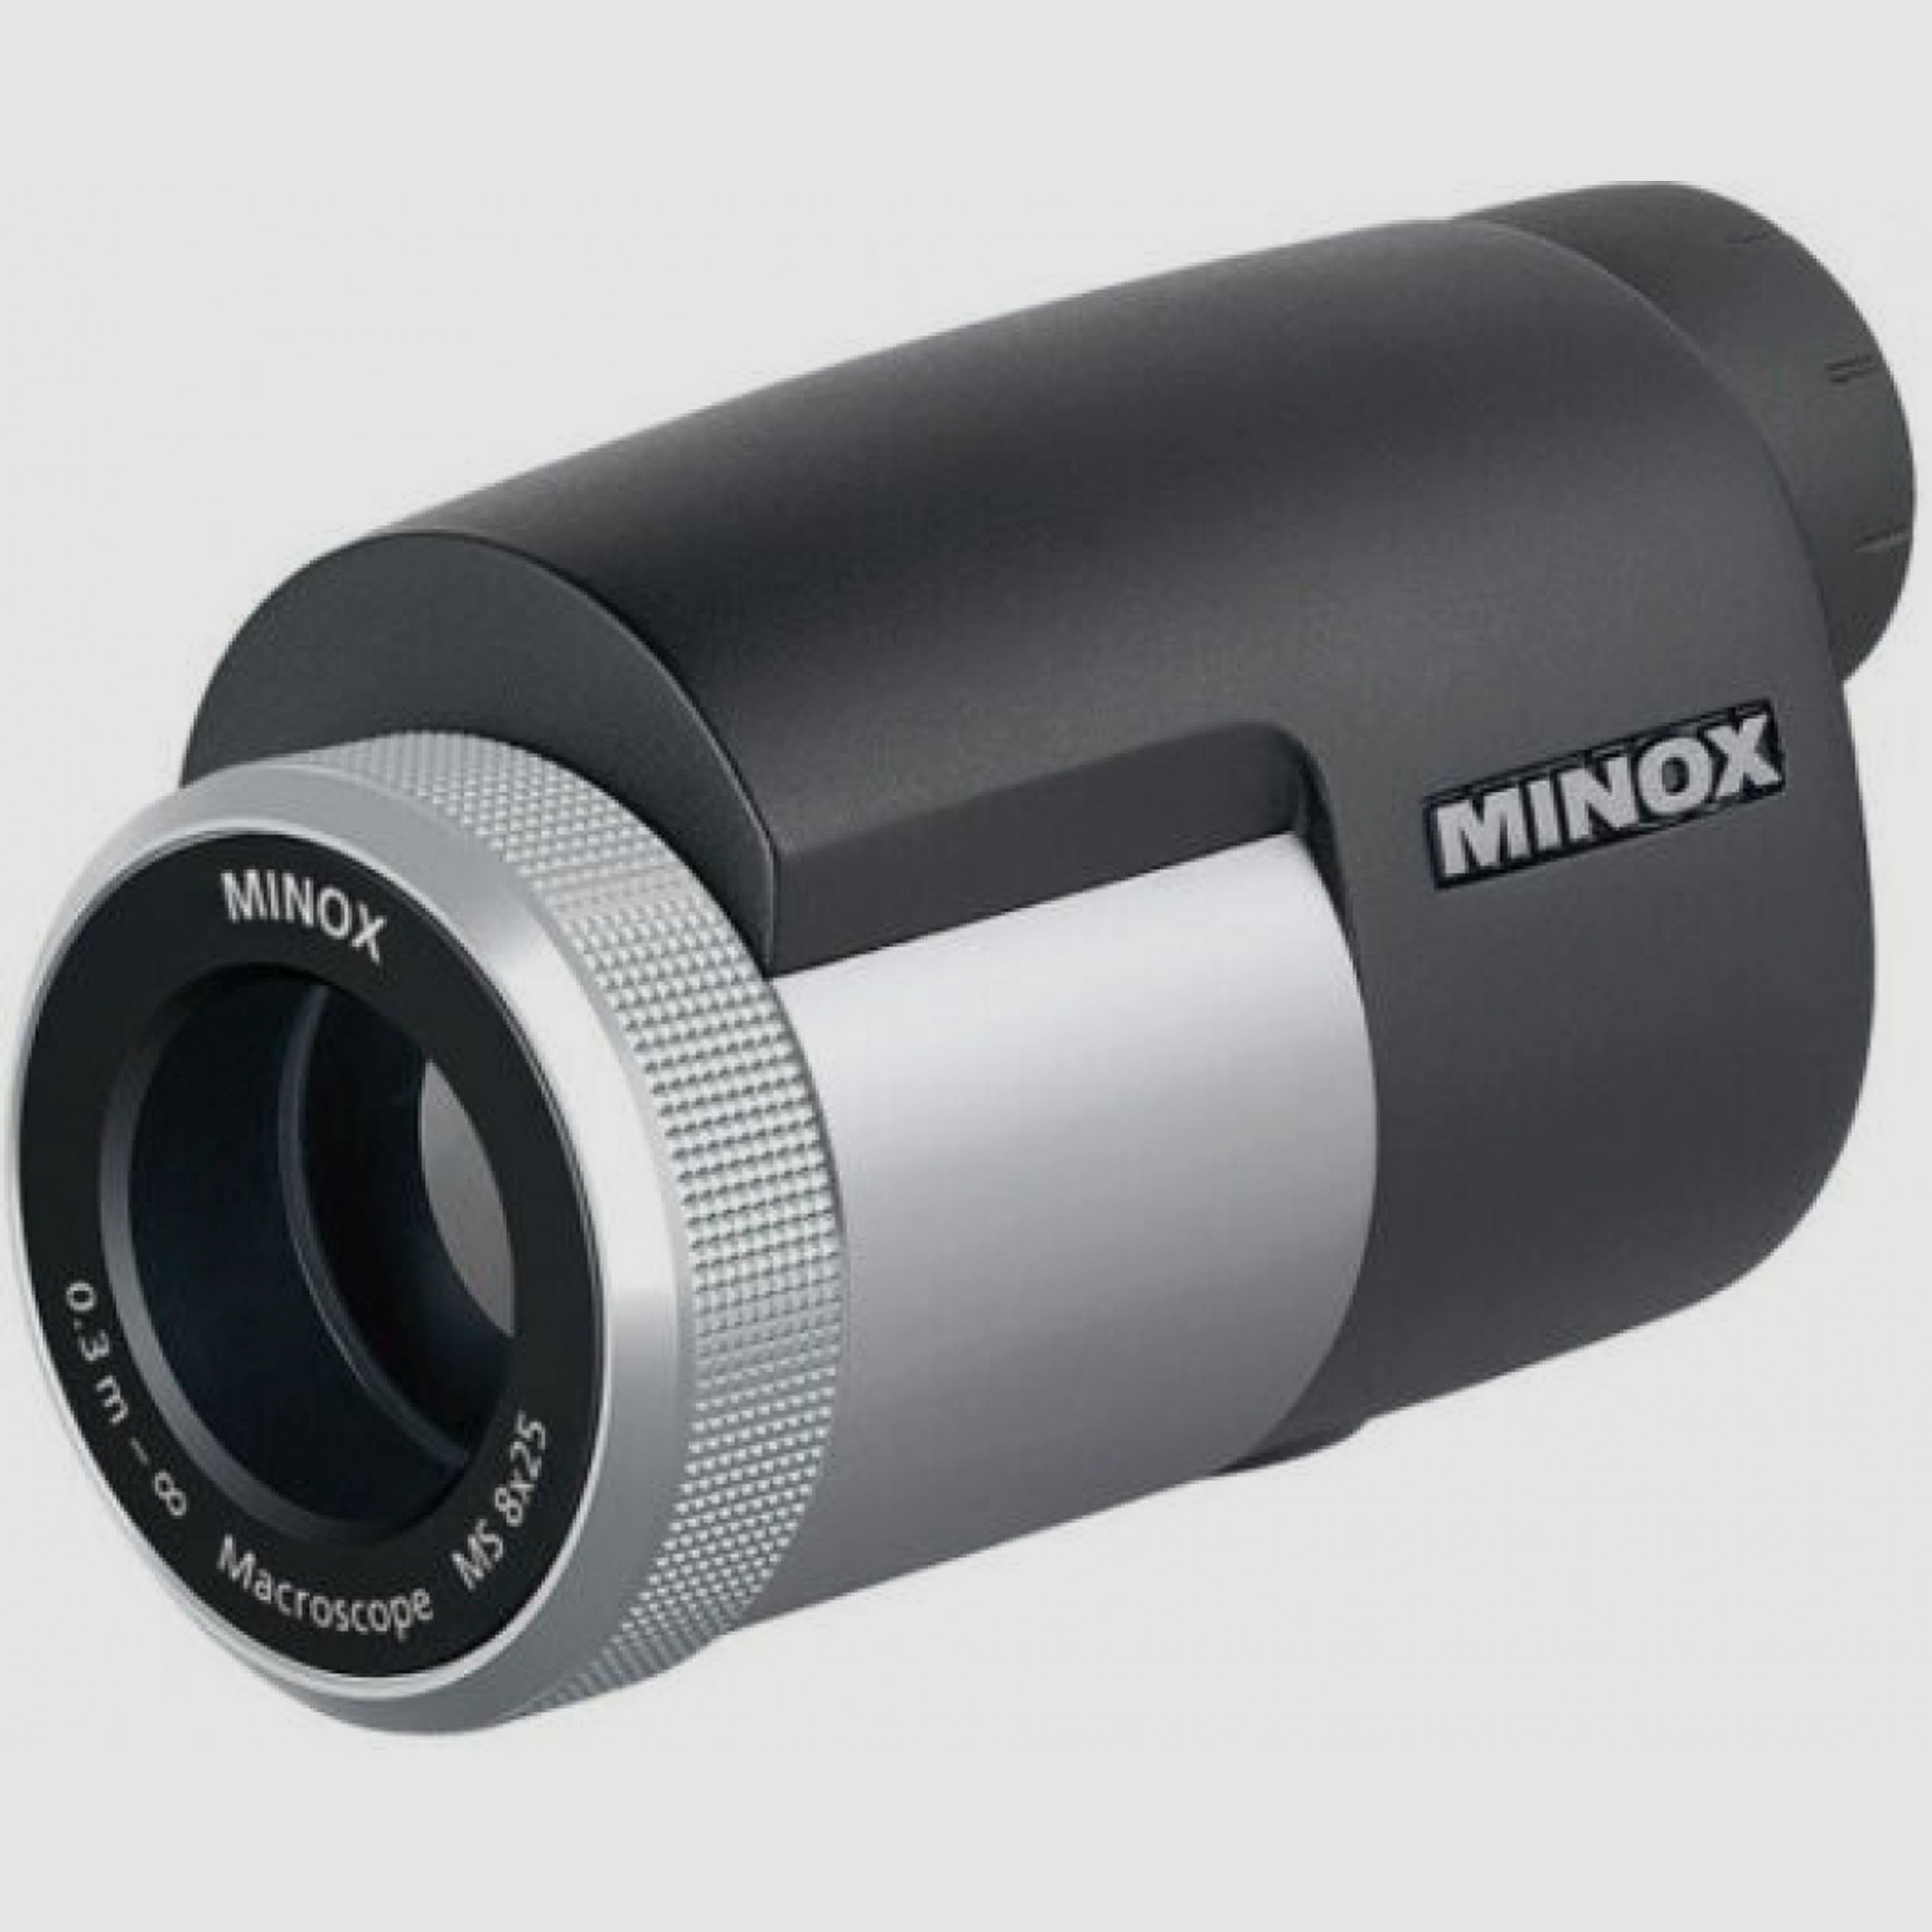 Minox Minox MS 8x25 Macroscope Silber/Schwarz -13,90€ 10% Fernglas Rabatt 125,10 Effektivpreis